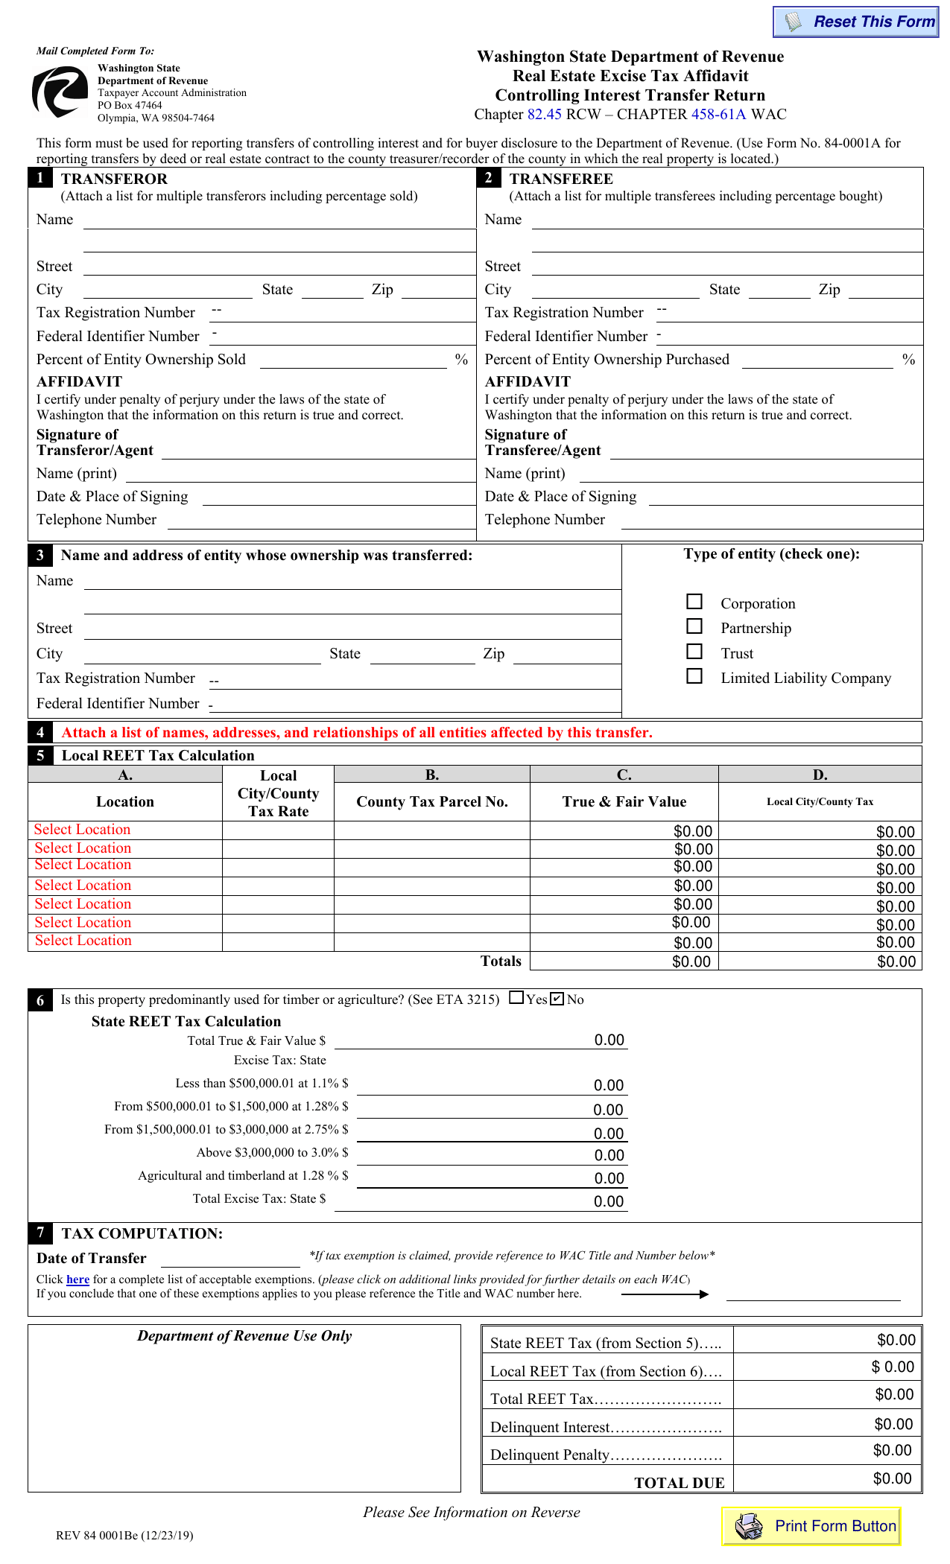 Form REV84 0001BE Real Estate Excise Tax Affidavit Controlling Interest Transfer Return - Washington, Page 1